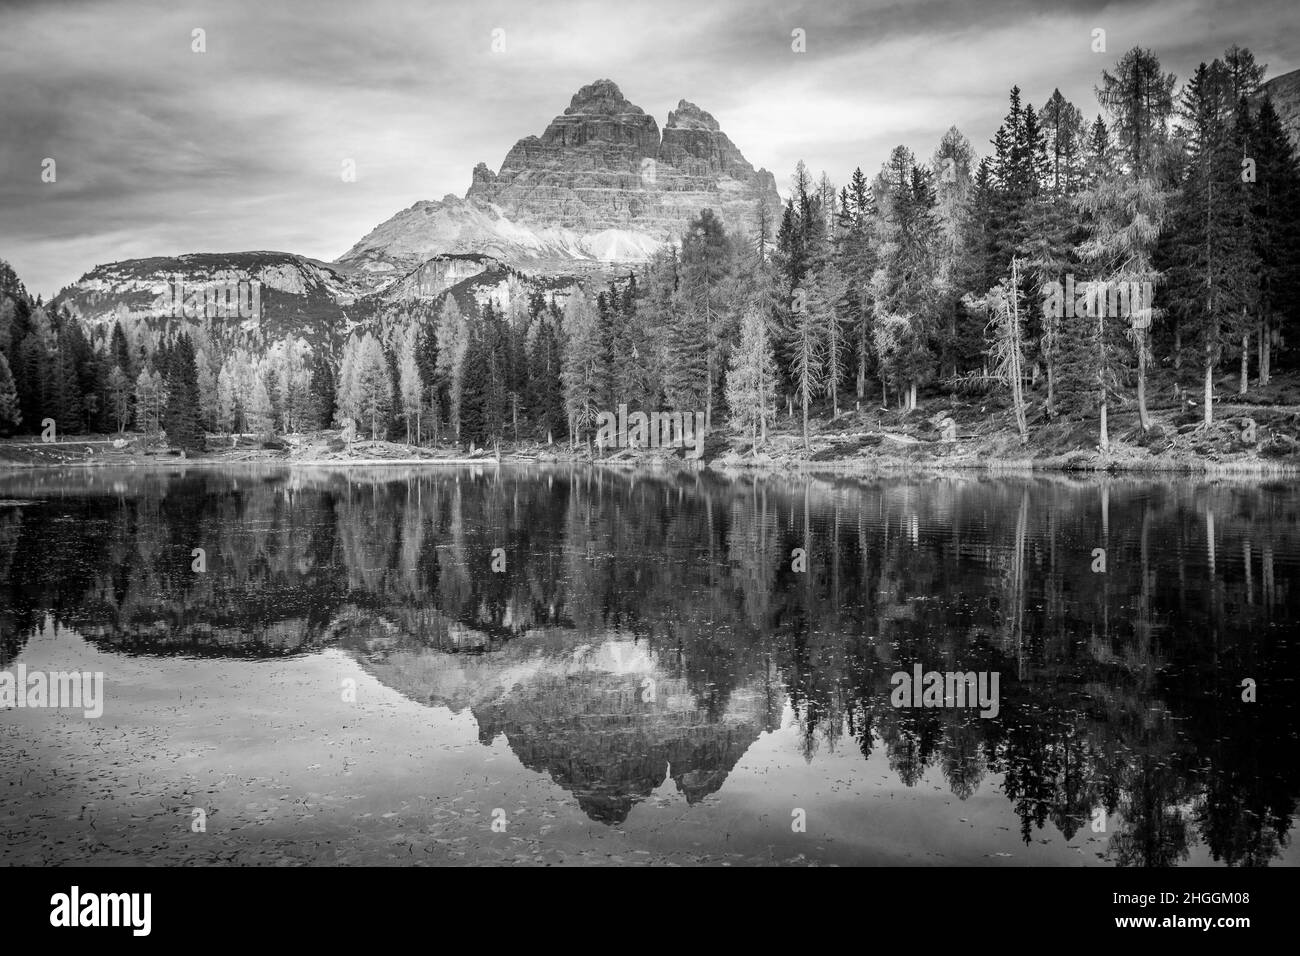 Reflection of larches and dolomitic peaks lake. Monochrome effect photo Stock Photo